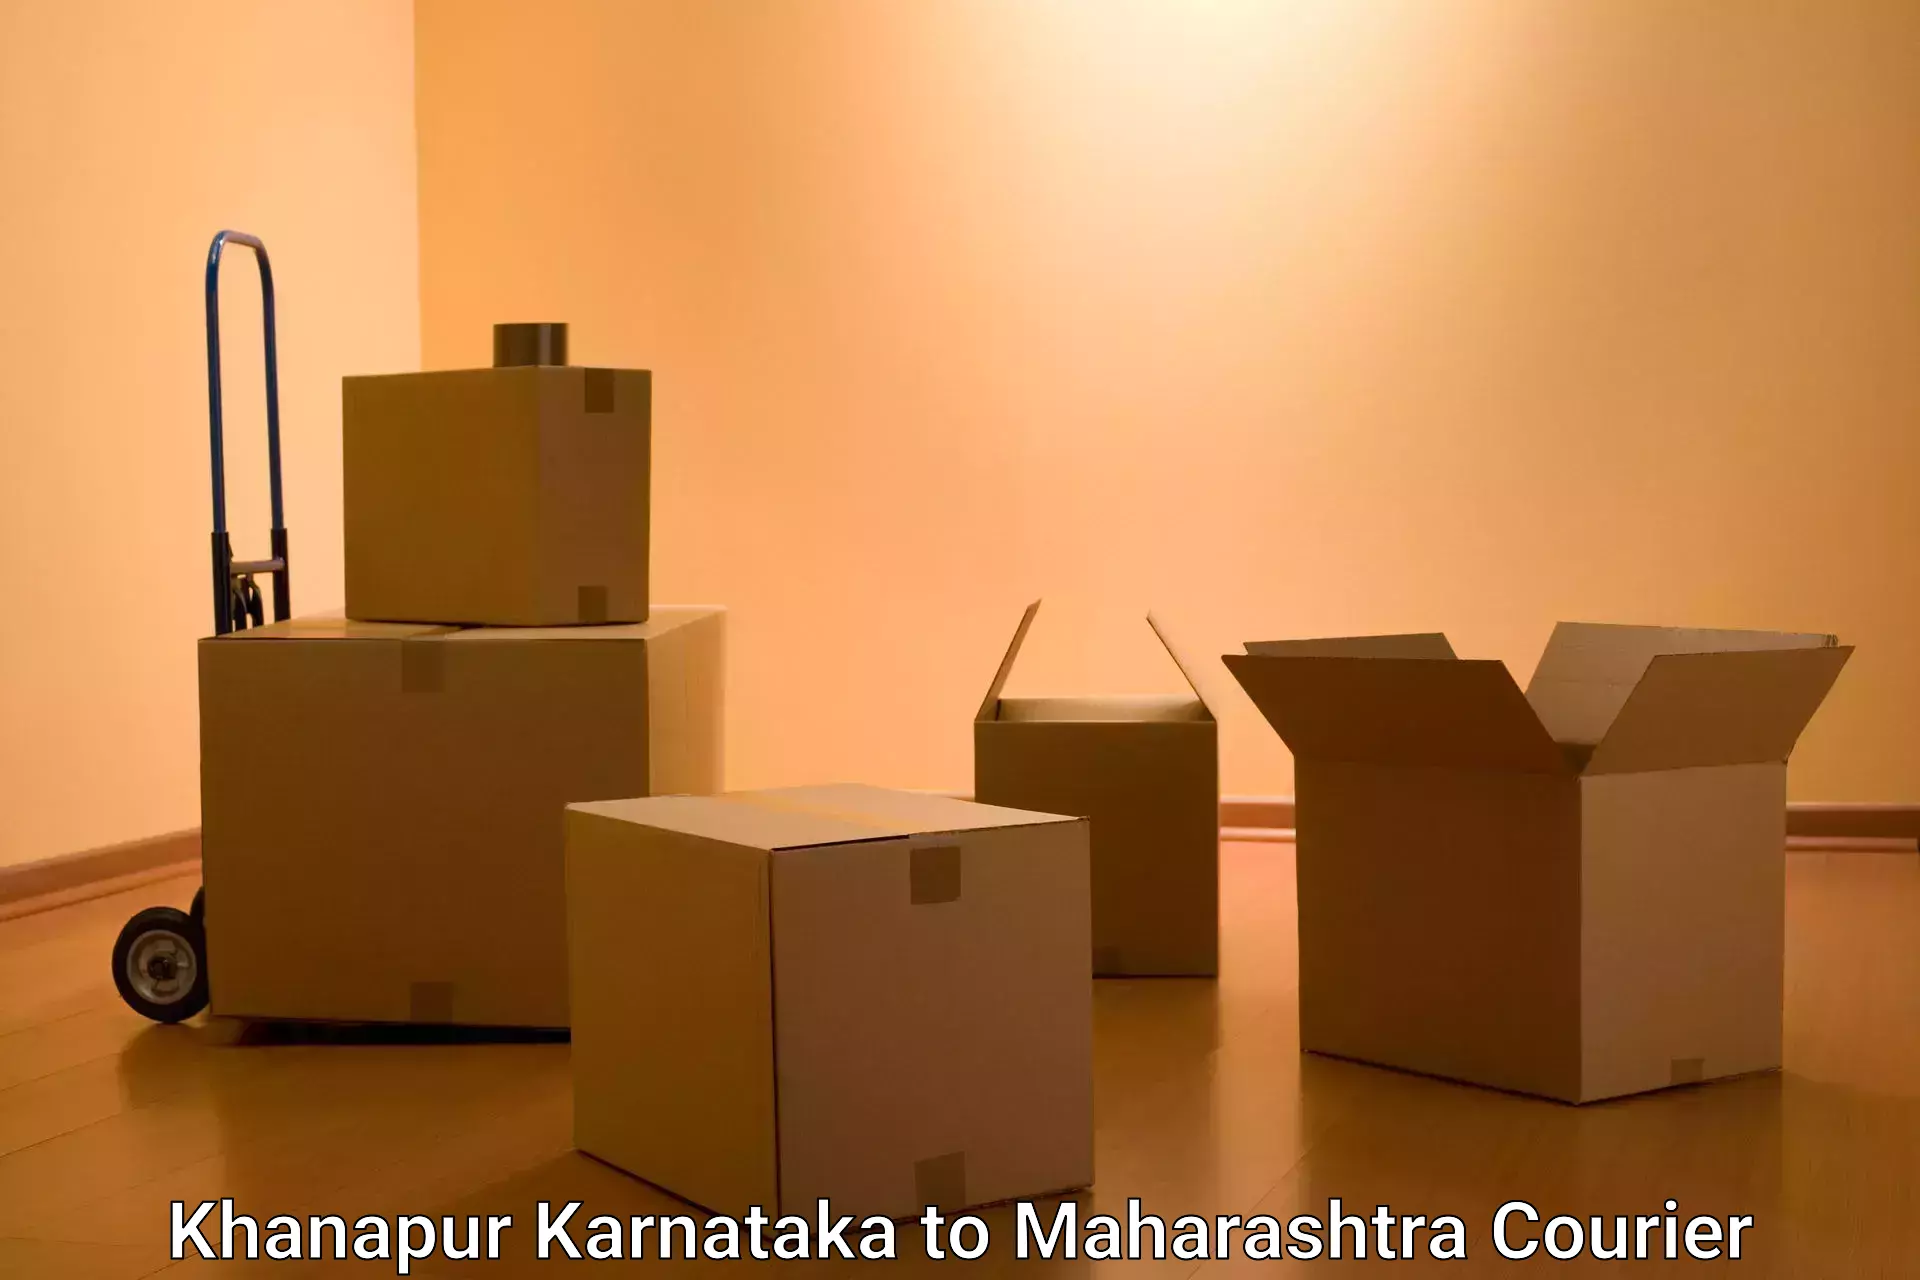 Courier services Khanapur Karnataka to Worli